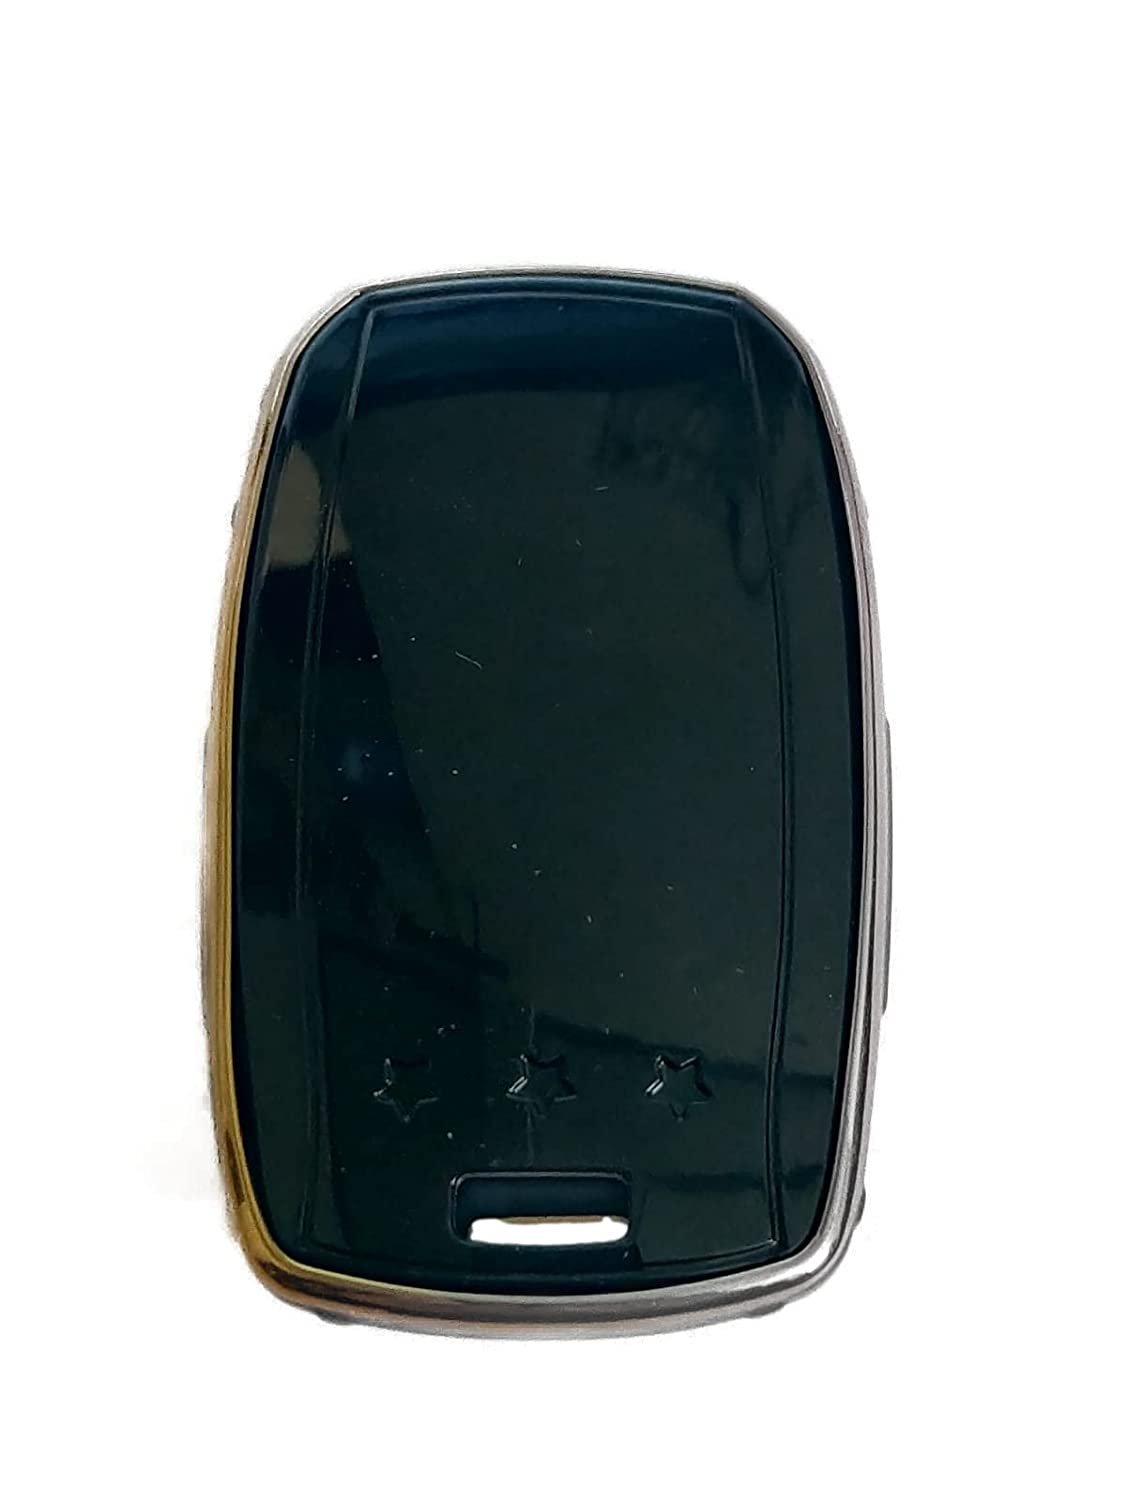 TPU Carbon Fiber Style Car Key Cover Compatible with Kia Seltos 3 Button Smart Key (Gold/Black)